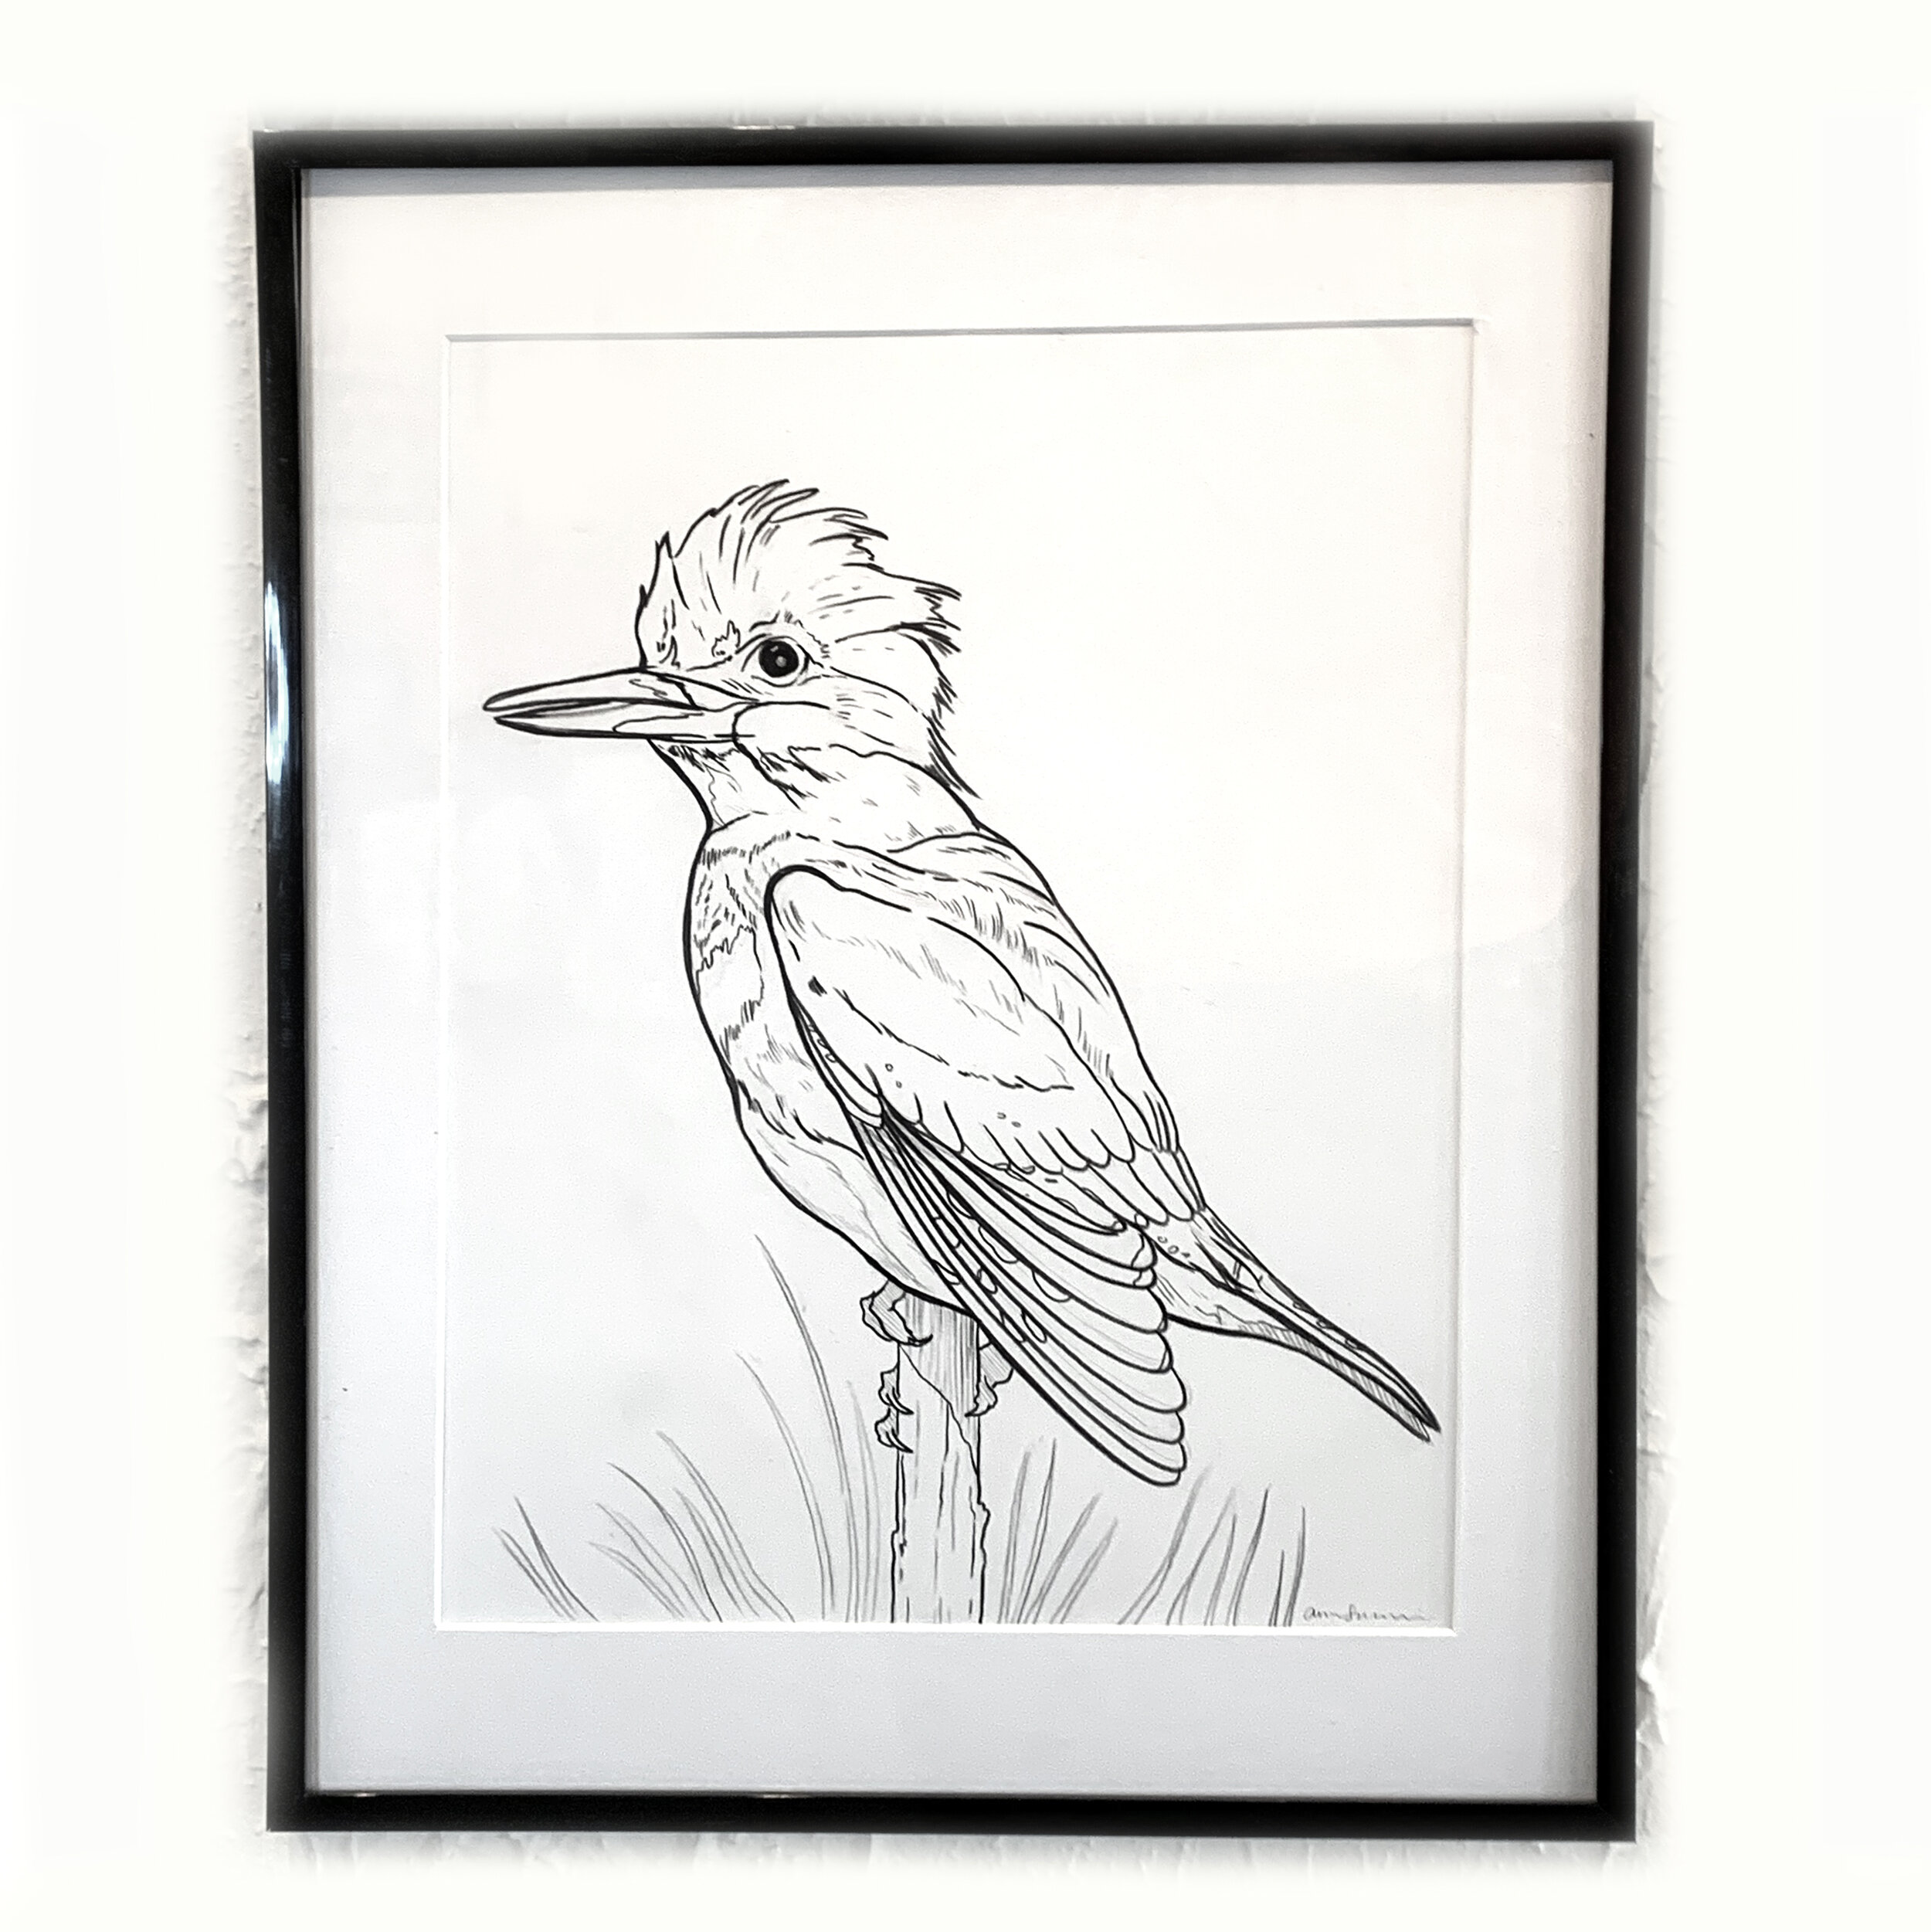 808 Kingfisher Sketch Images, Stock Photos & Vectors | Shutterstock